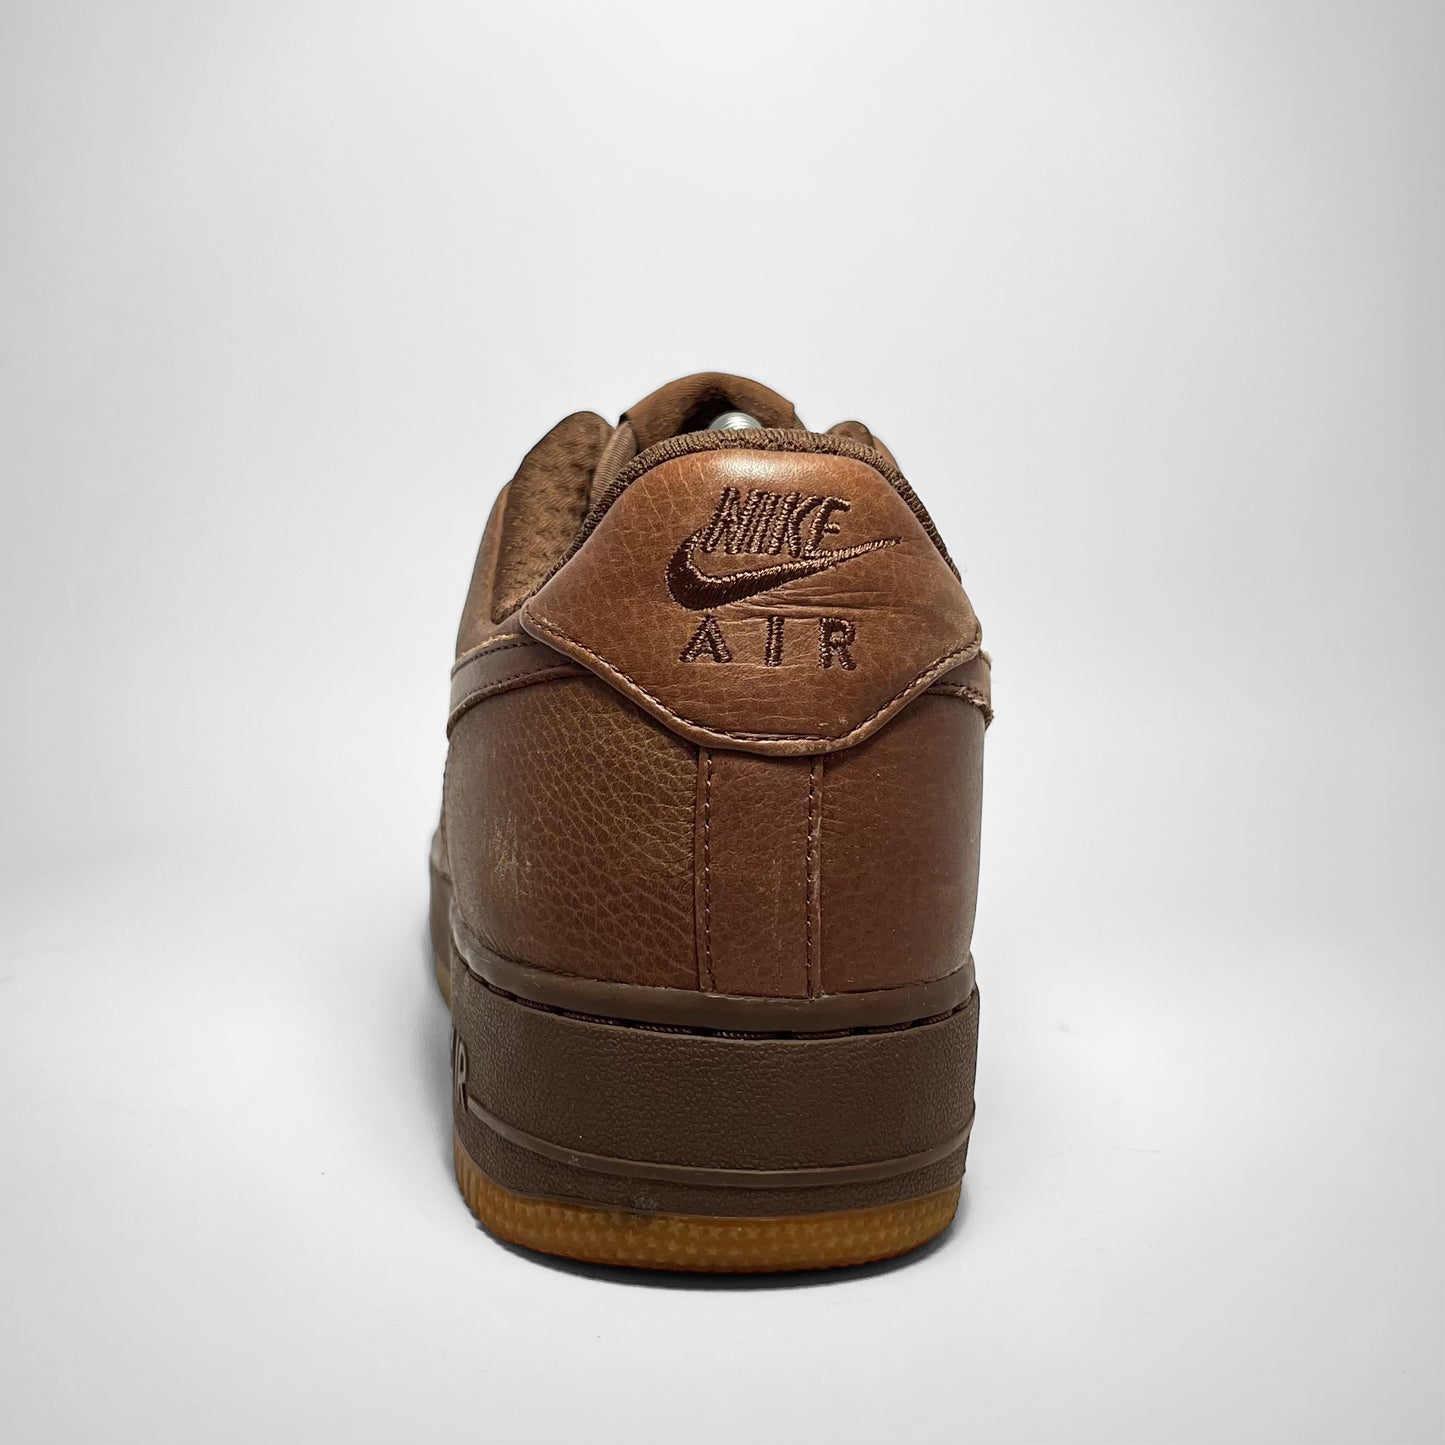 Nike Air Force 1 Premium Leather (2006)